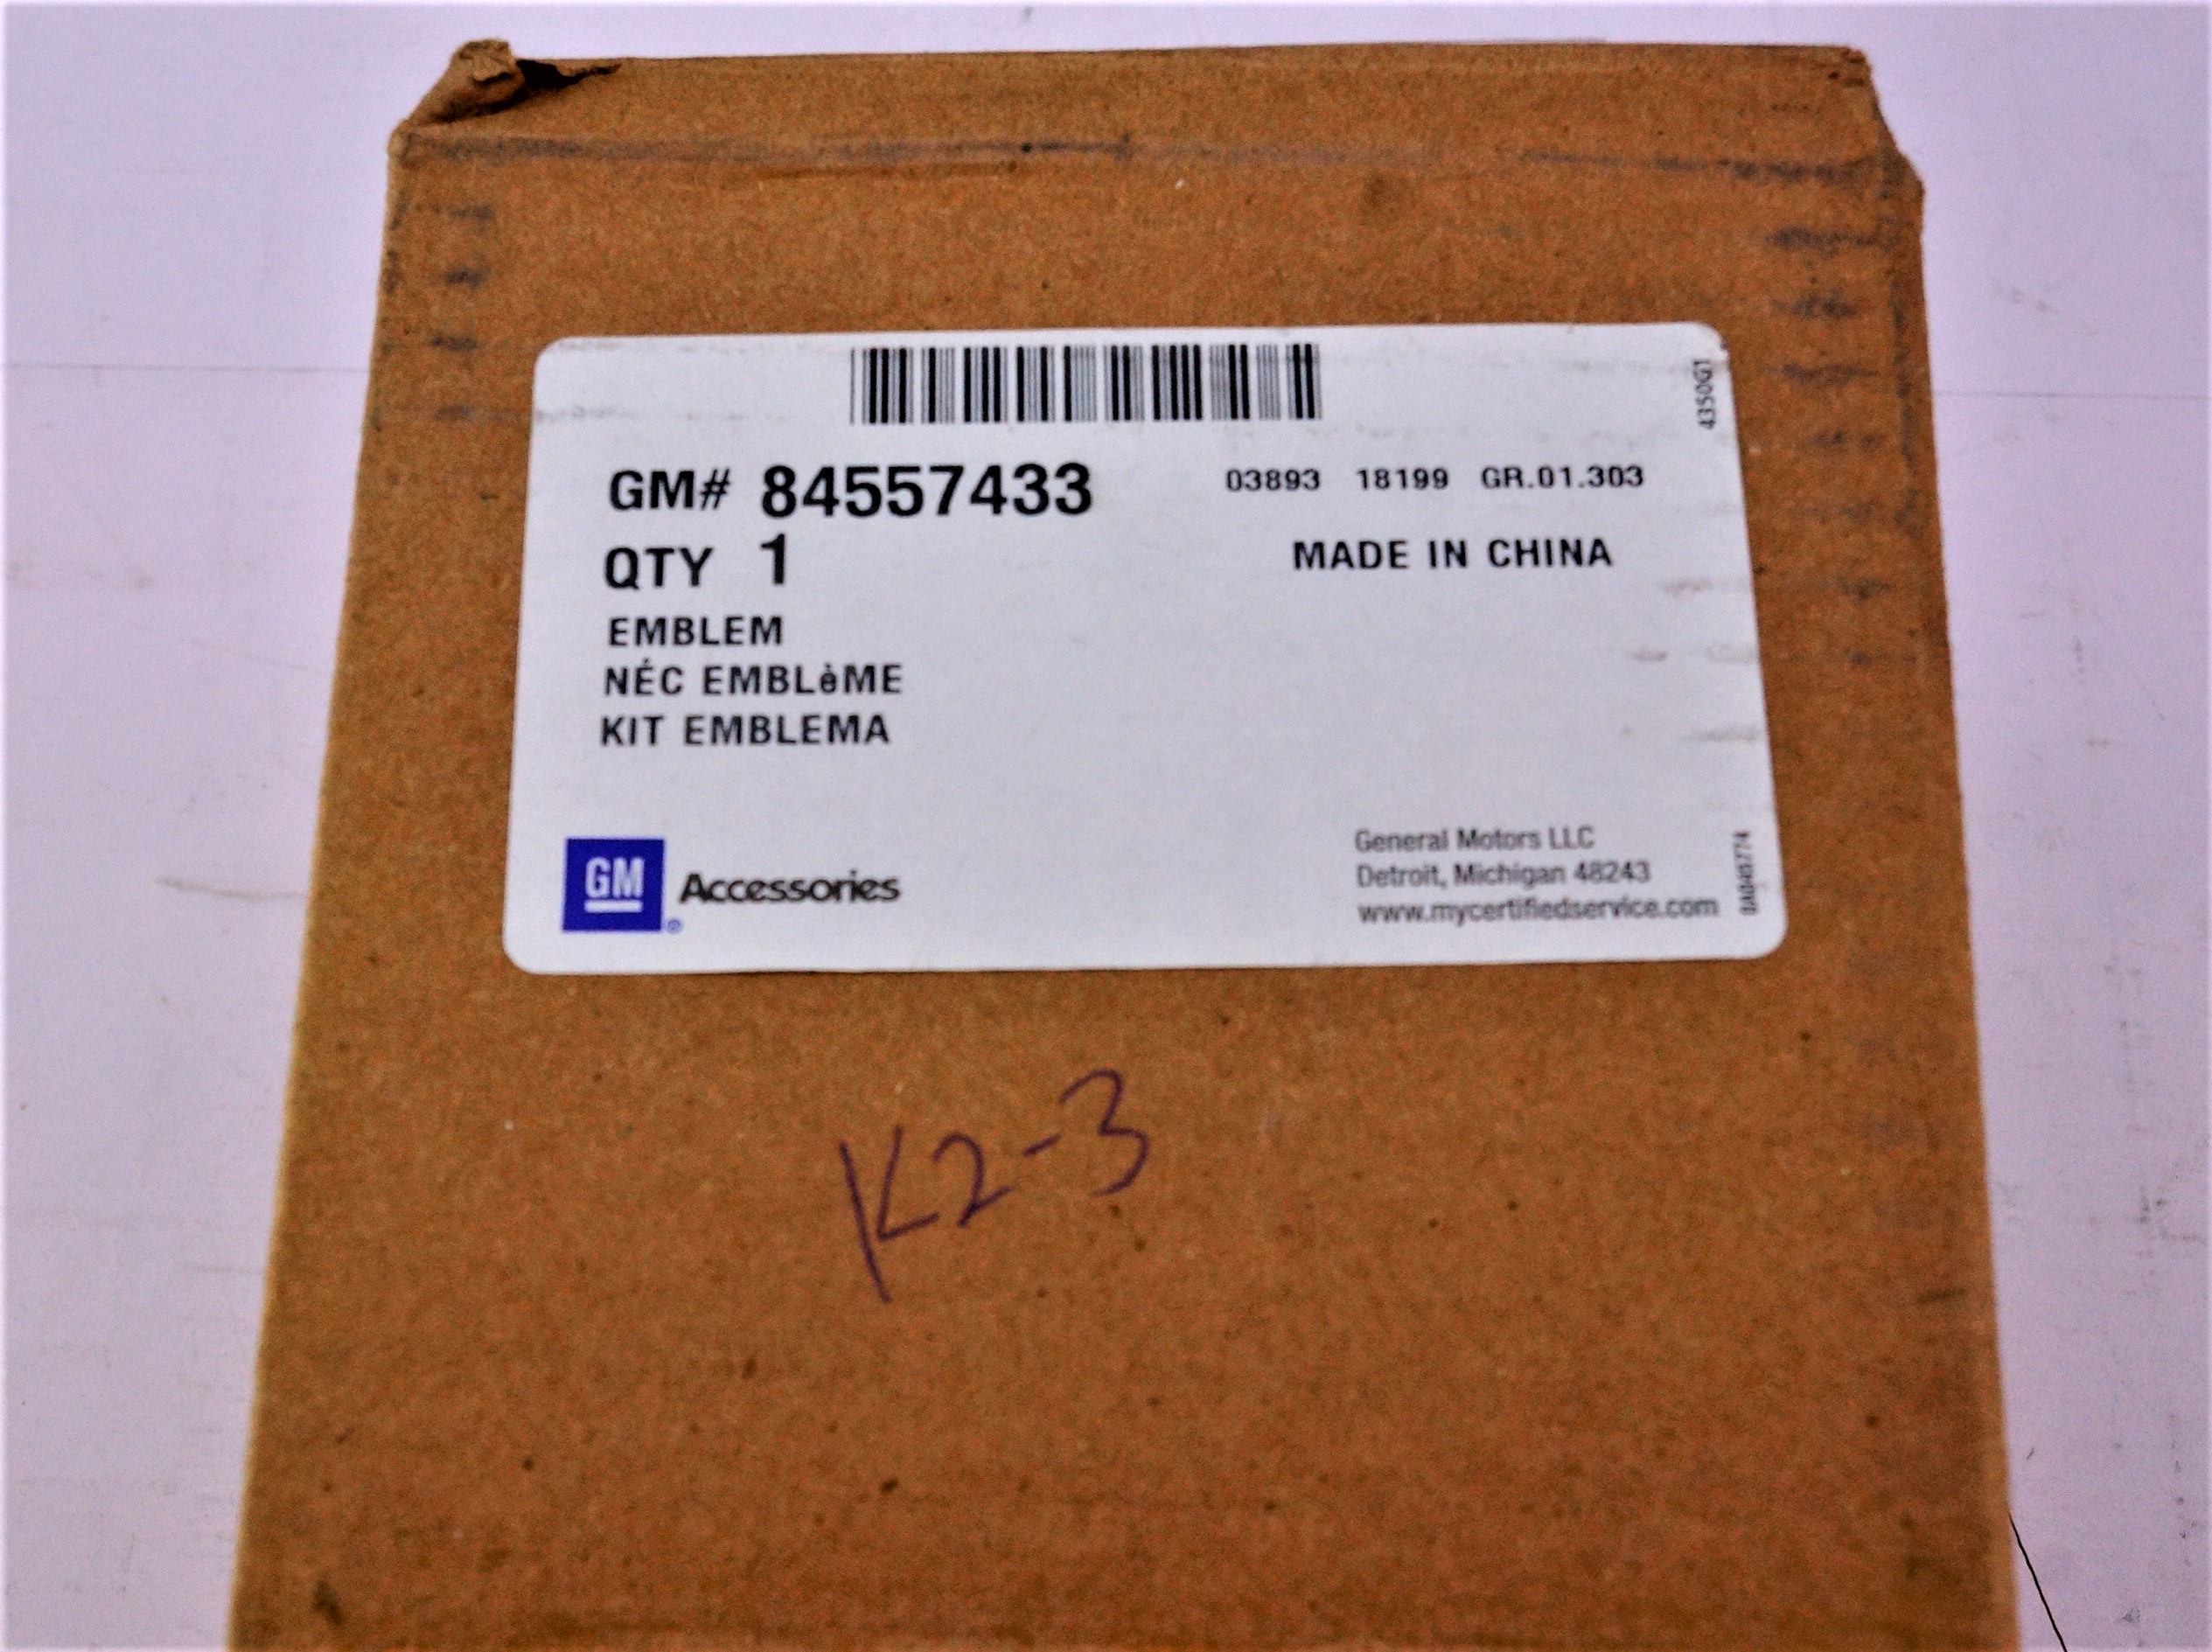 New Genuine OEM GM 84557433 Silverado Next Gen Black Emblem Kit Free Shipping - image 6